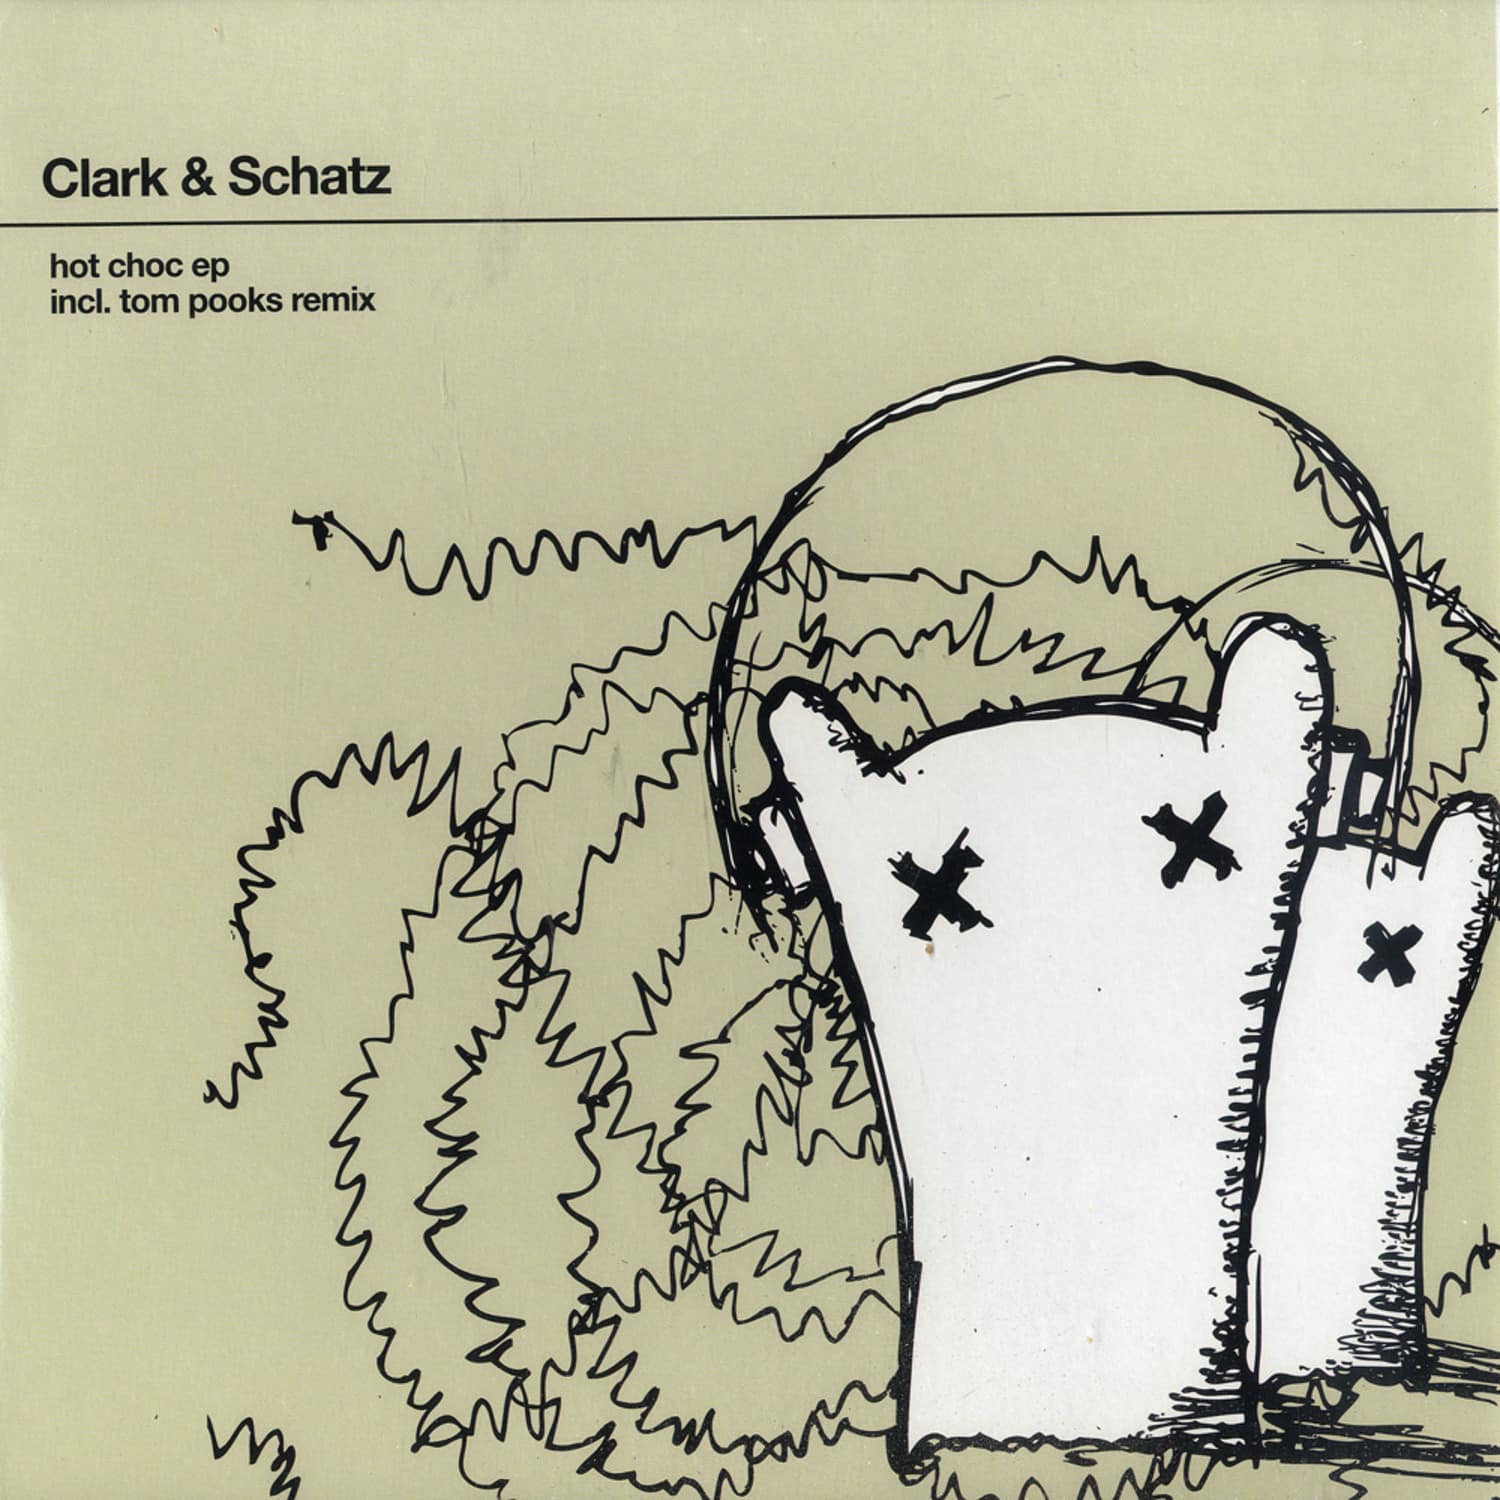 Clark & Schatz - HOT CHOC EP